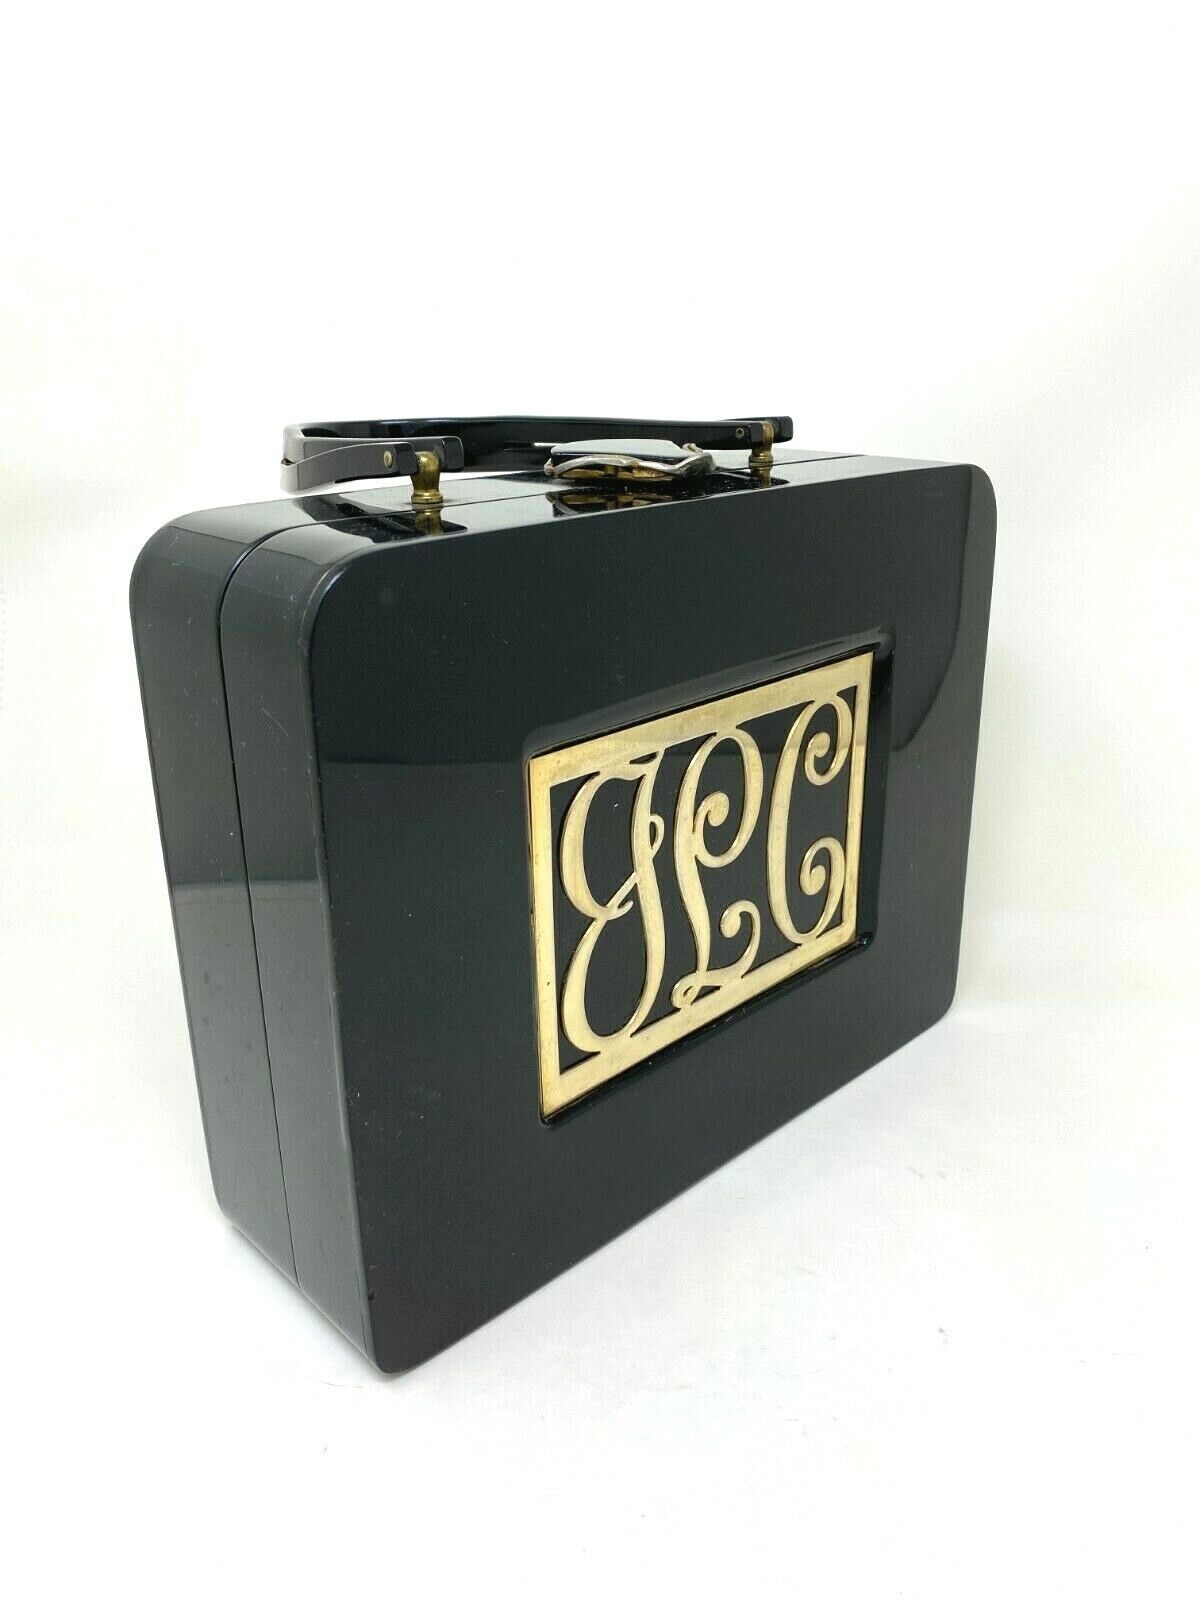 RARE Vintage 1950s Lucite Box Purse Gold Initialed Black - GOOD